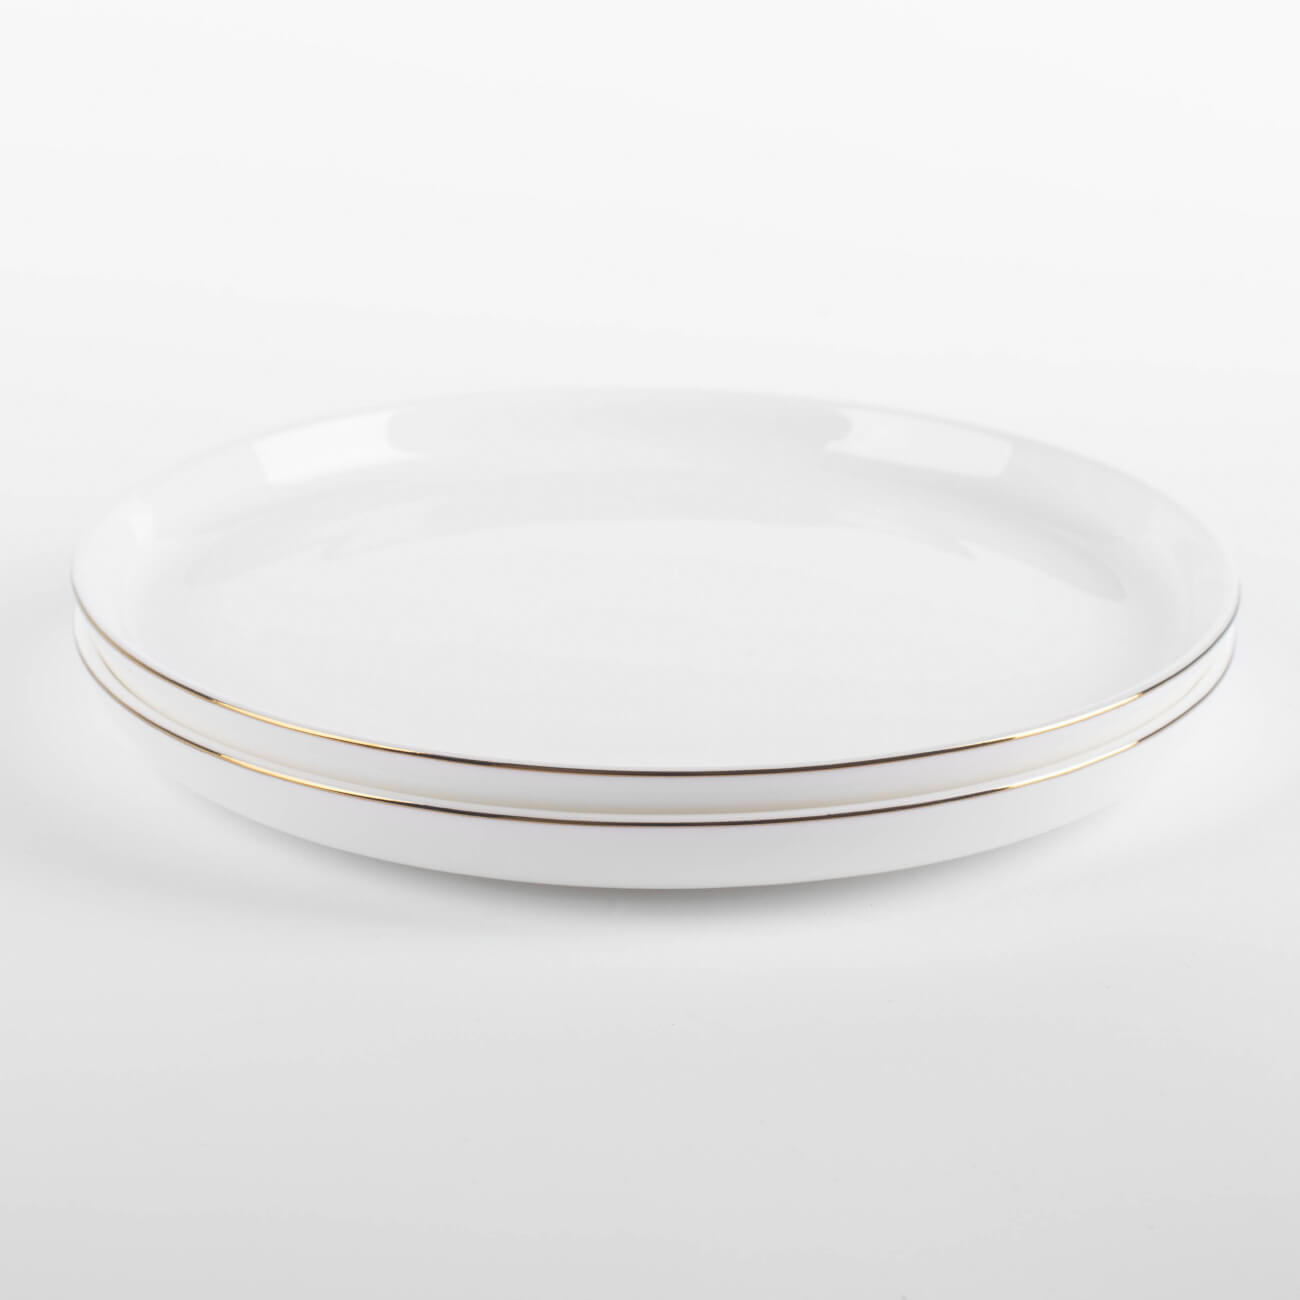 Тарелка десертная, 20 см, 2 шт, фарфор F, белая, Ideal gold тарелка десертная tudor royal circle 21 см